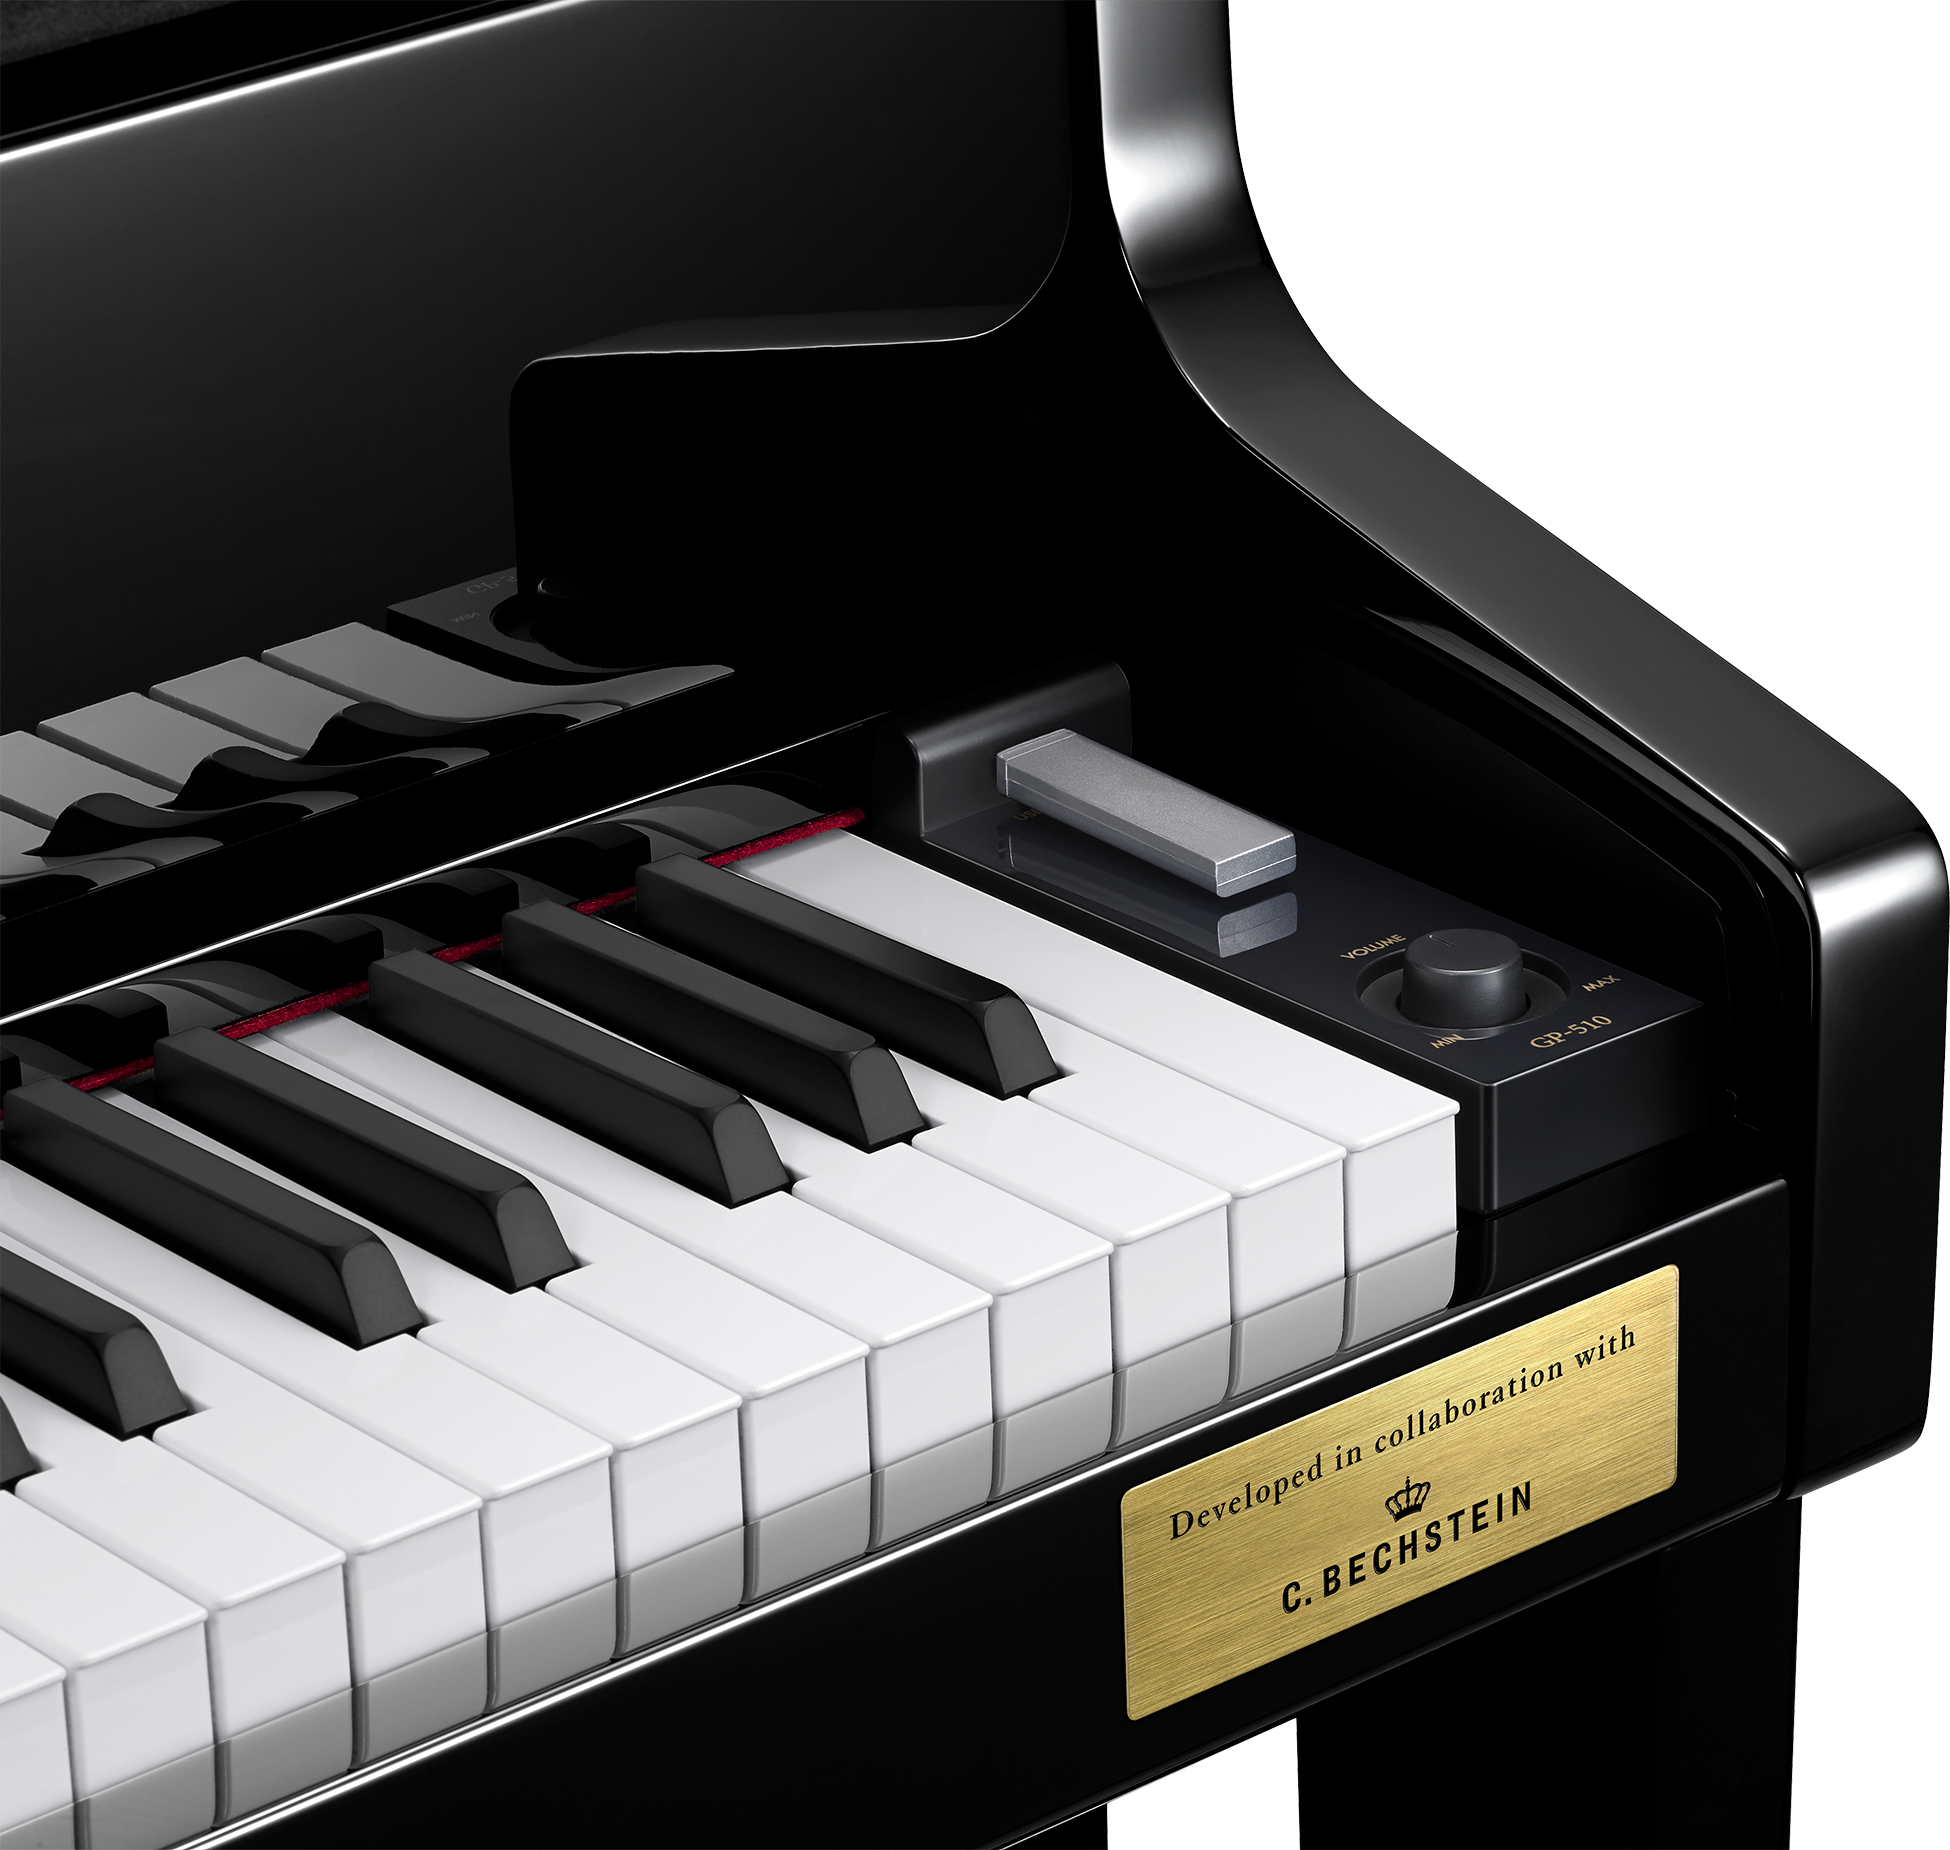 Цифровое пианино Casio Celviano GP-510BP